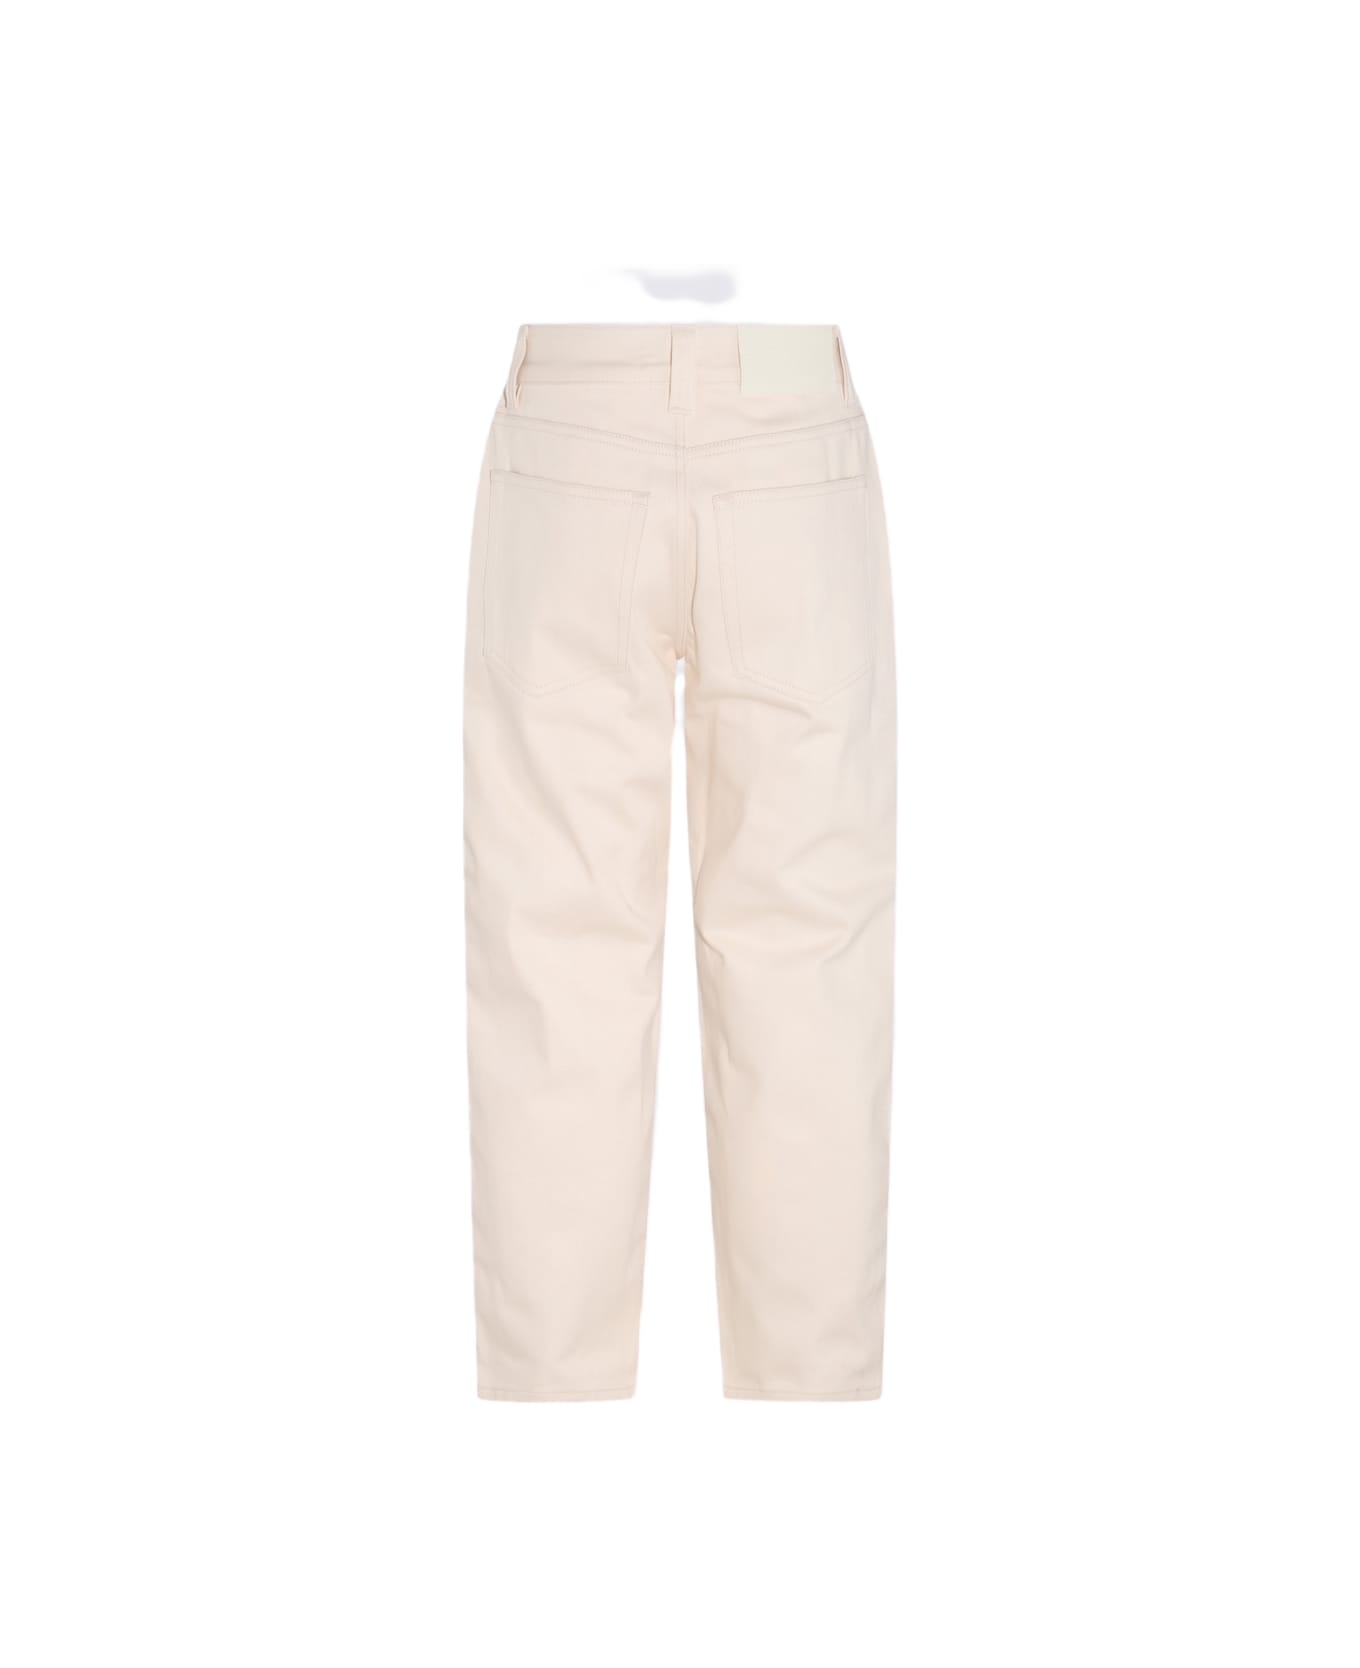 Sunnei Ecru White Stripes Cotton Pants - ECRU WHITE STRIPES